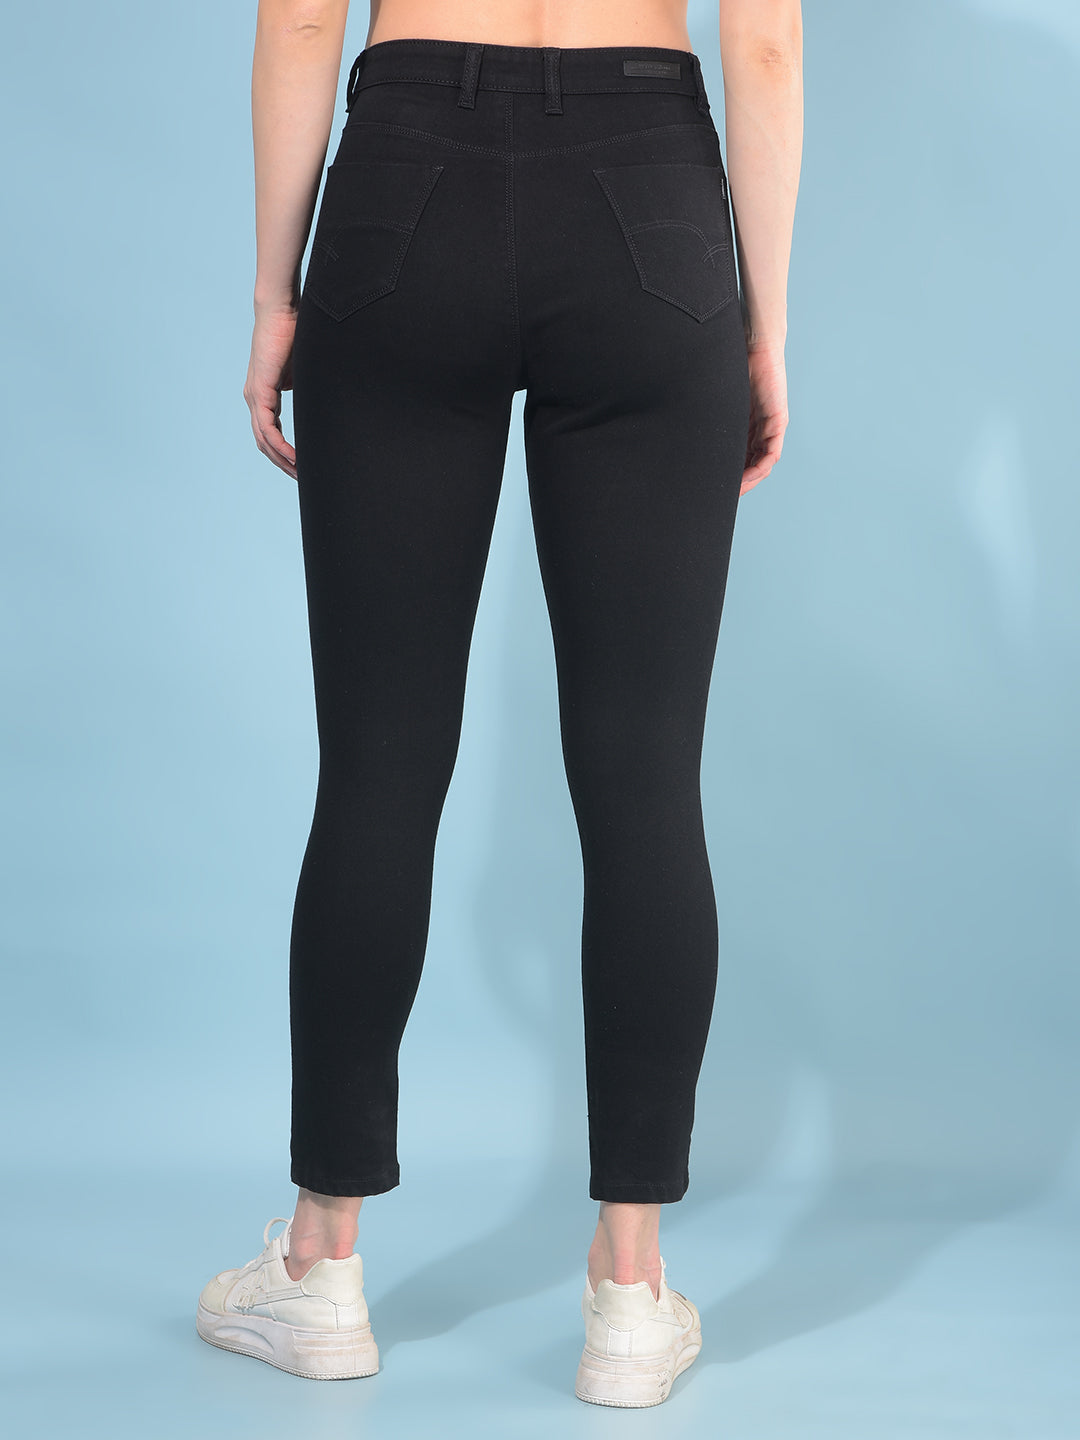 Black Skinny Cotton Jeans-Women Jeans-Crimsoune Club